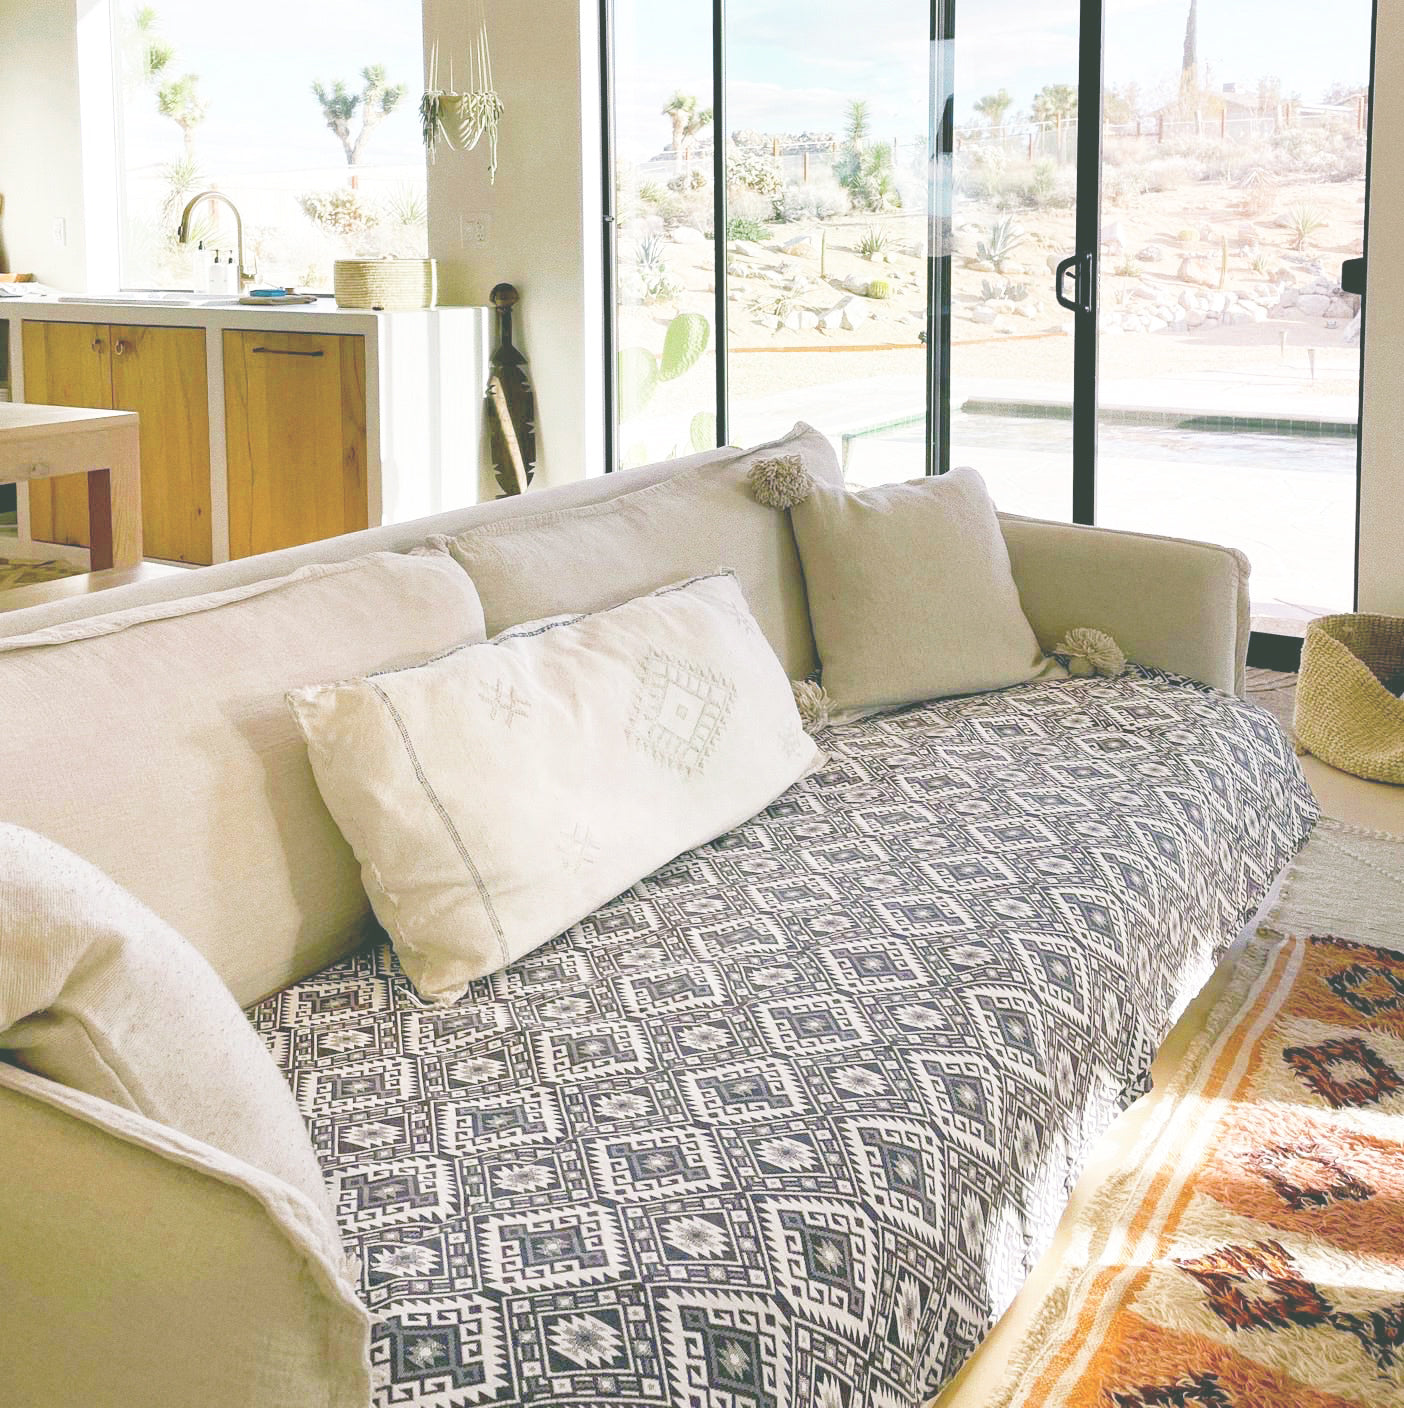 Kilim pattern cotton blanket as a sofa cover.